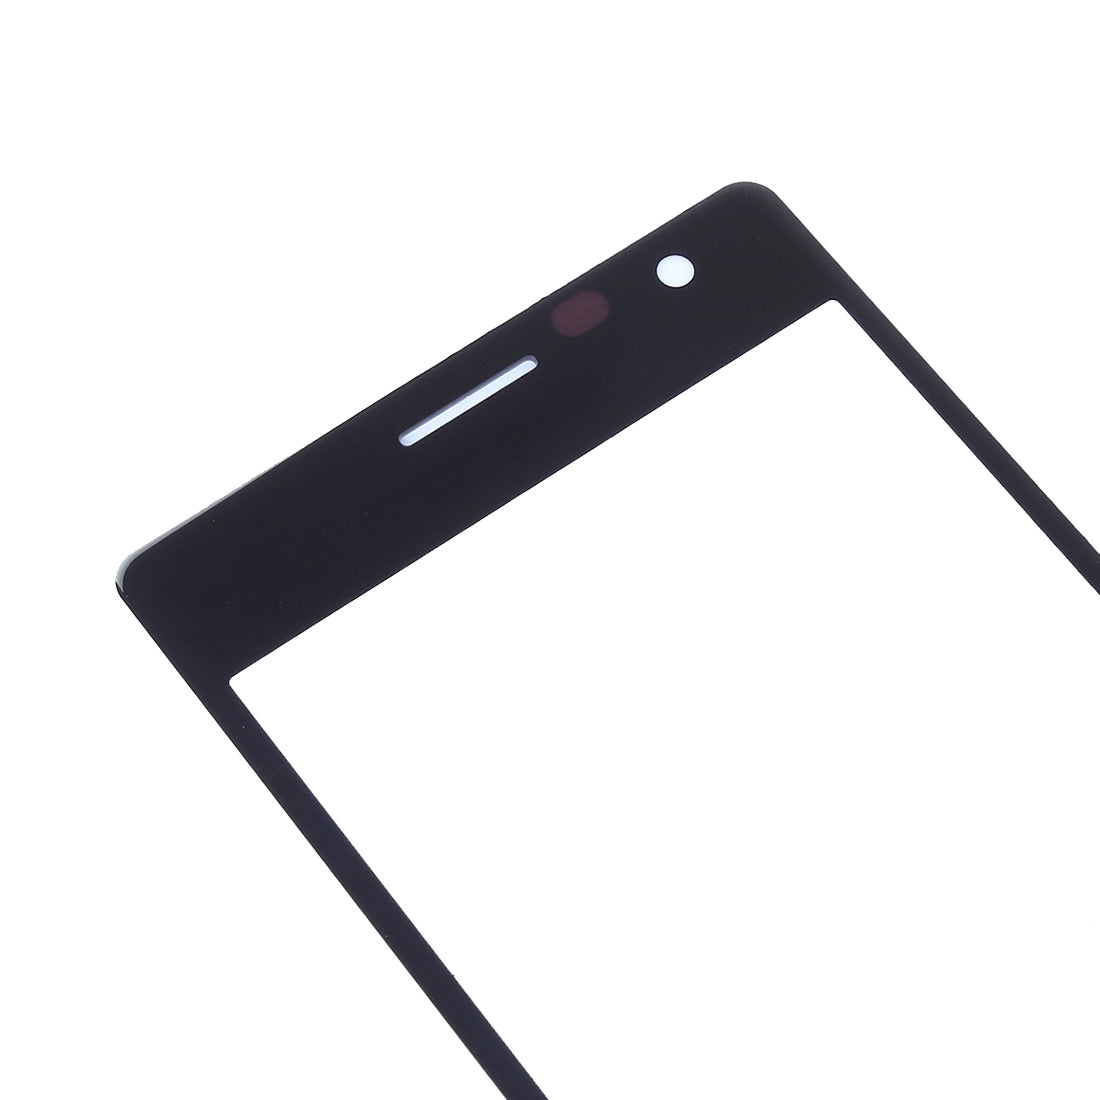 Outer Glass Front Screen Nokia Lumia 730 Black